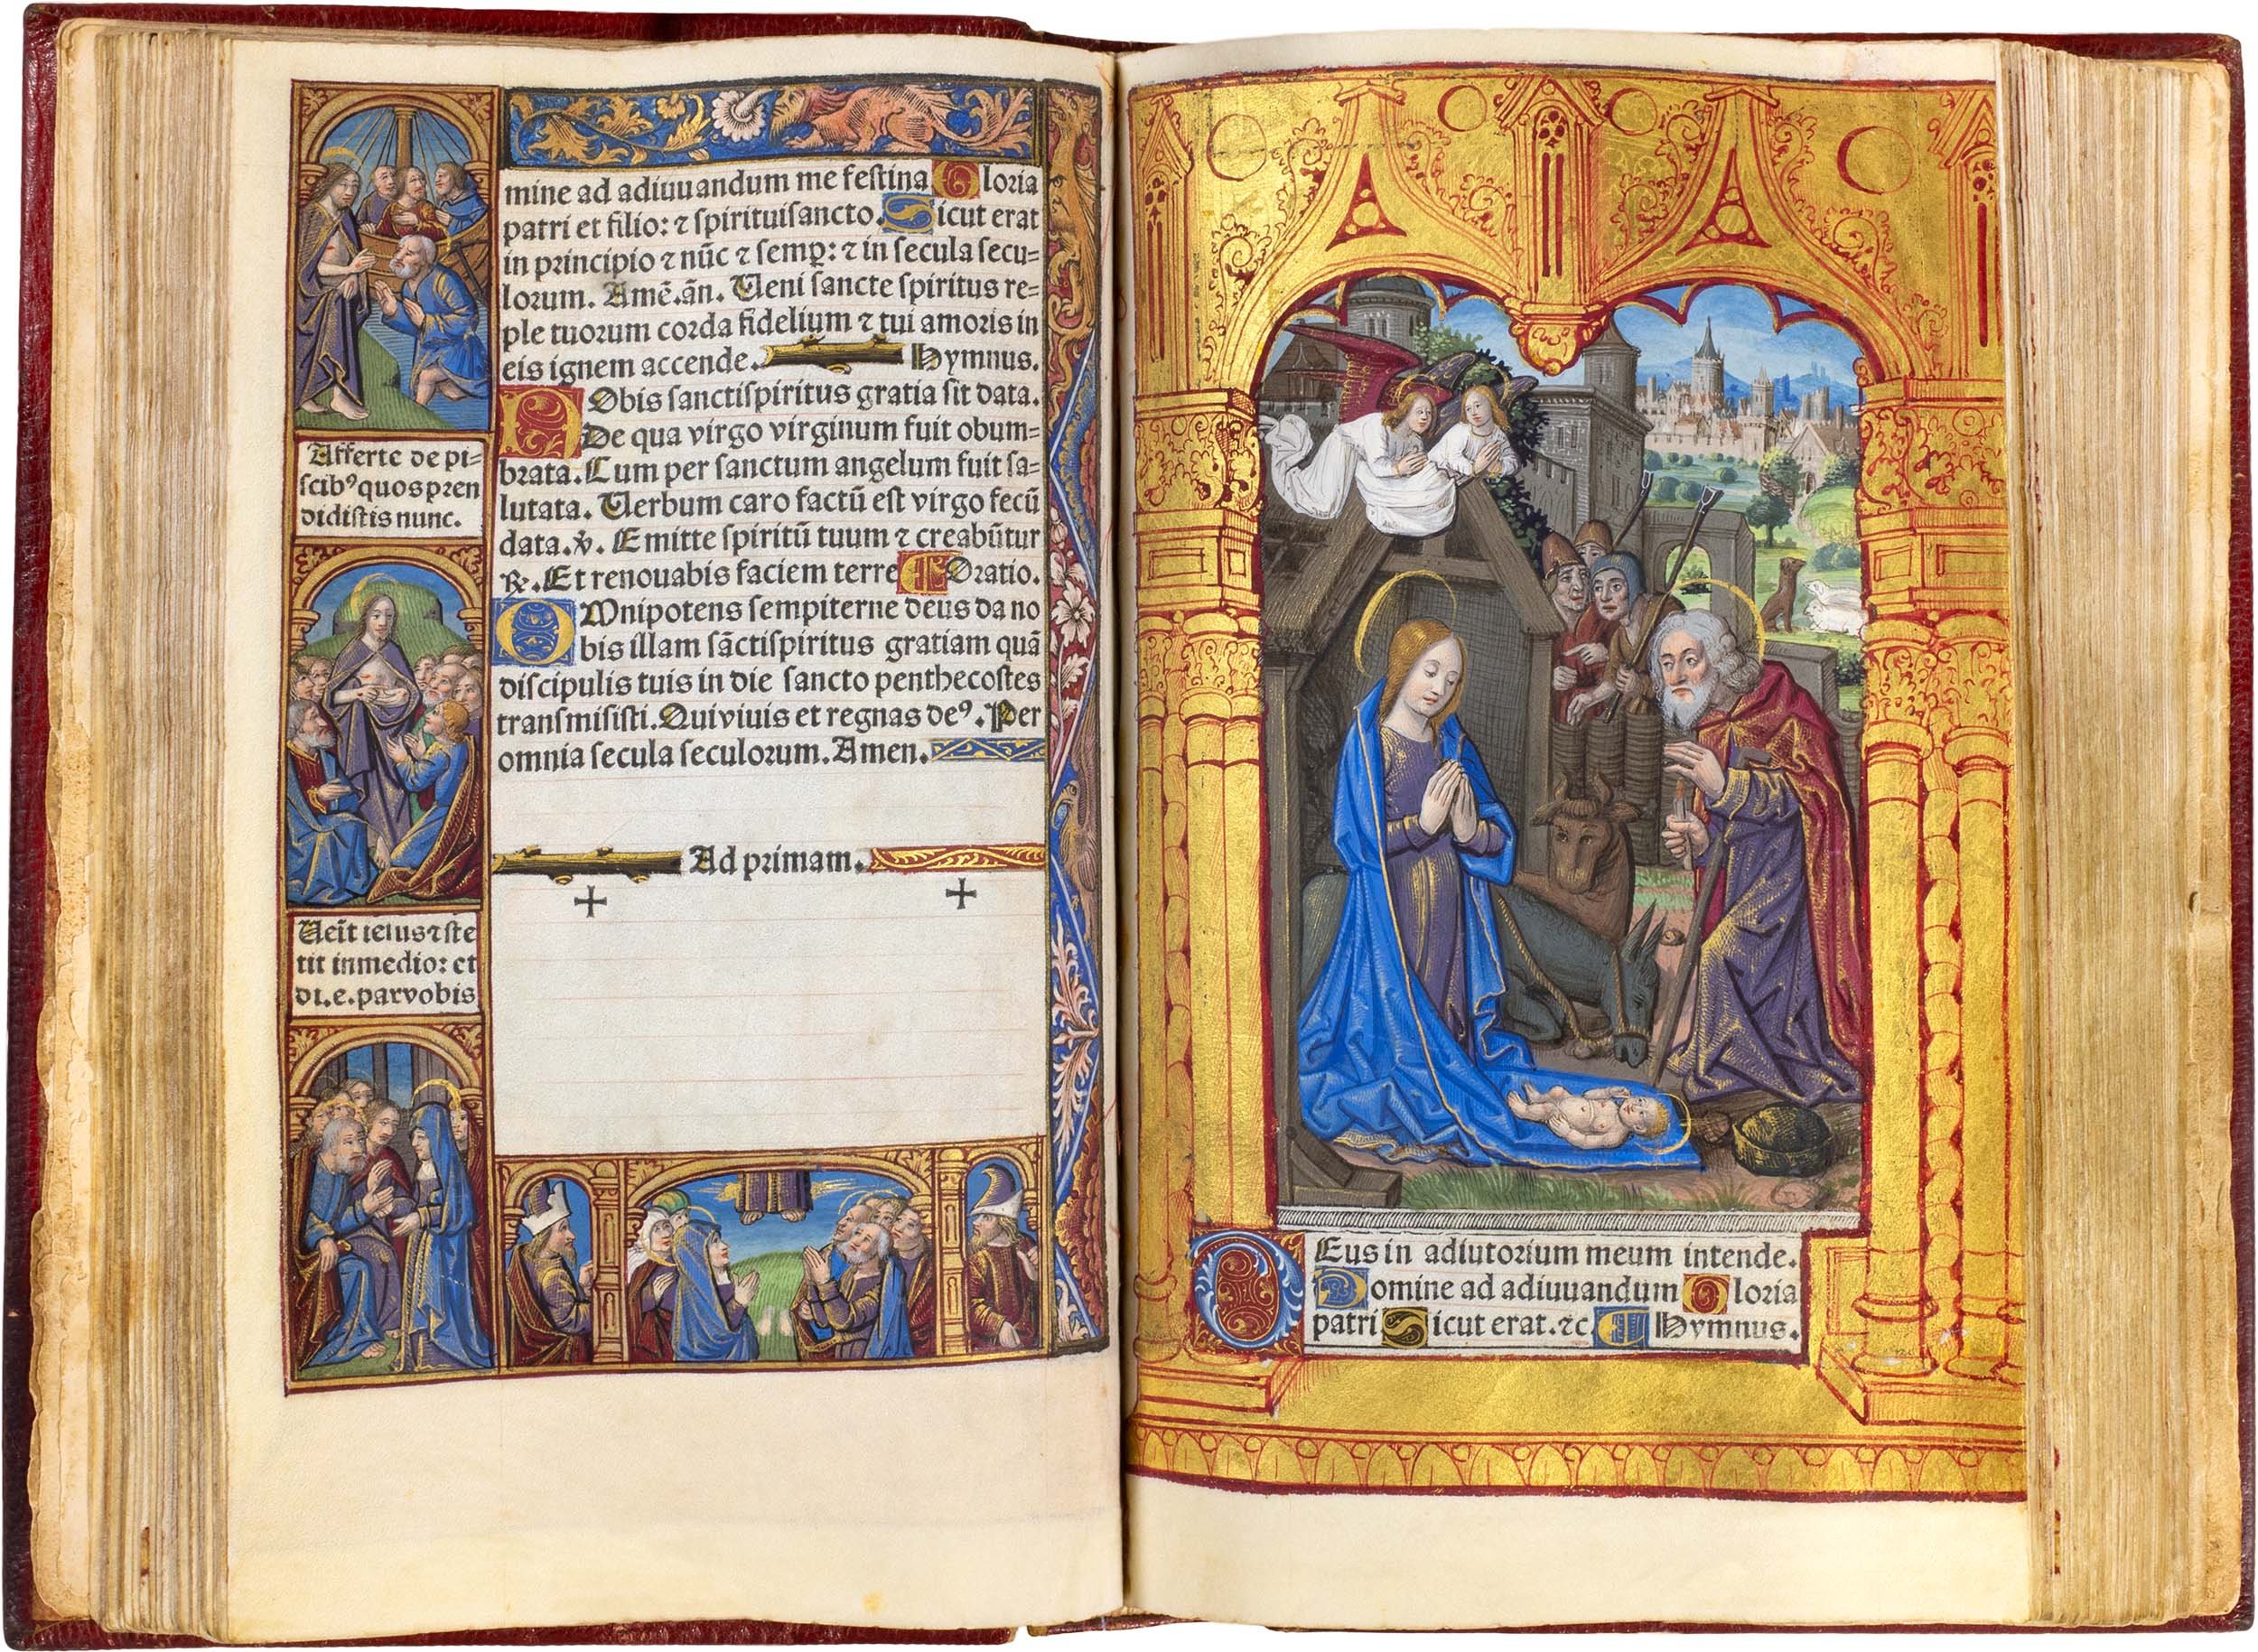 Horae-bmv-book-of-hours-Louis-XII-martainville-master-philippa-guelders-paris-pigouchet-vostre-15.10.1499-34.jpg